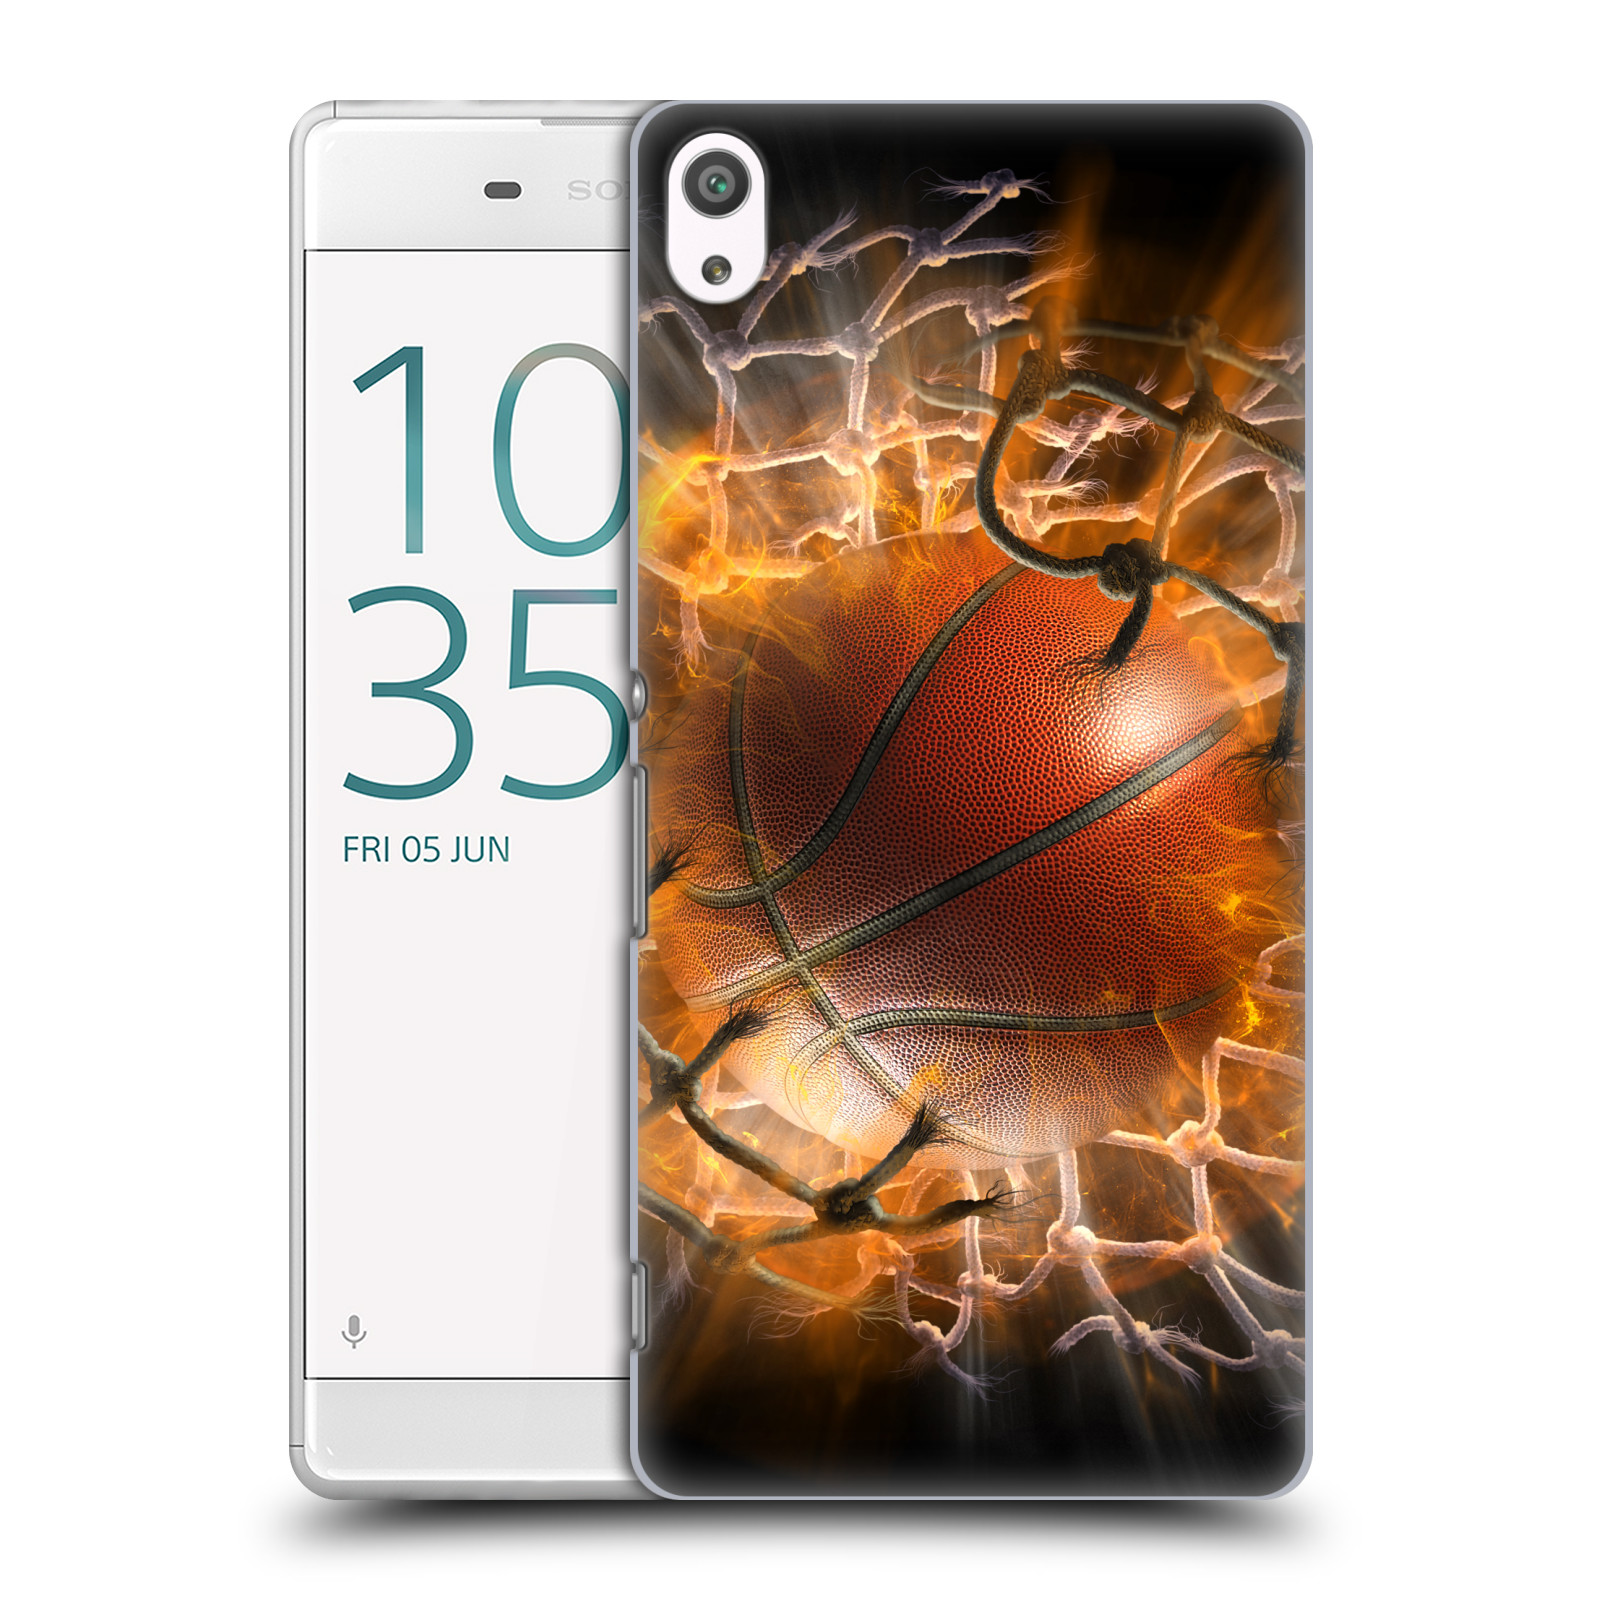 Pouzdro na mobil Sony Xperia XA ULTRA - HEAD CASE - Fantasy kresby Tom Wood - Basketball